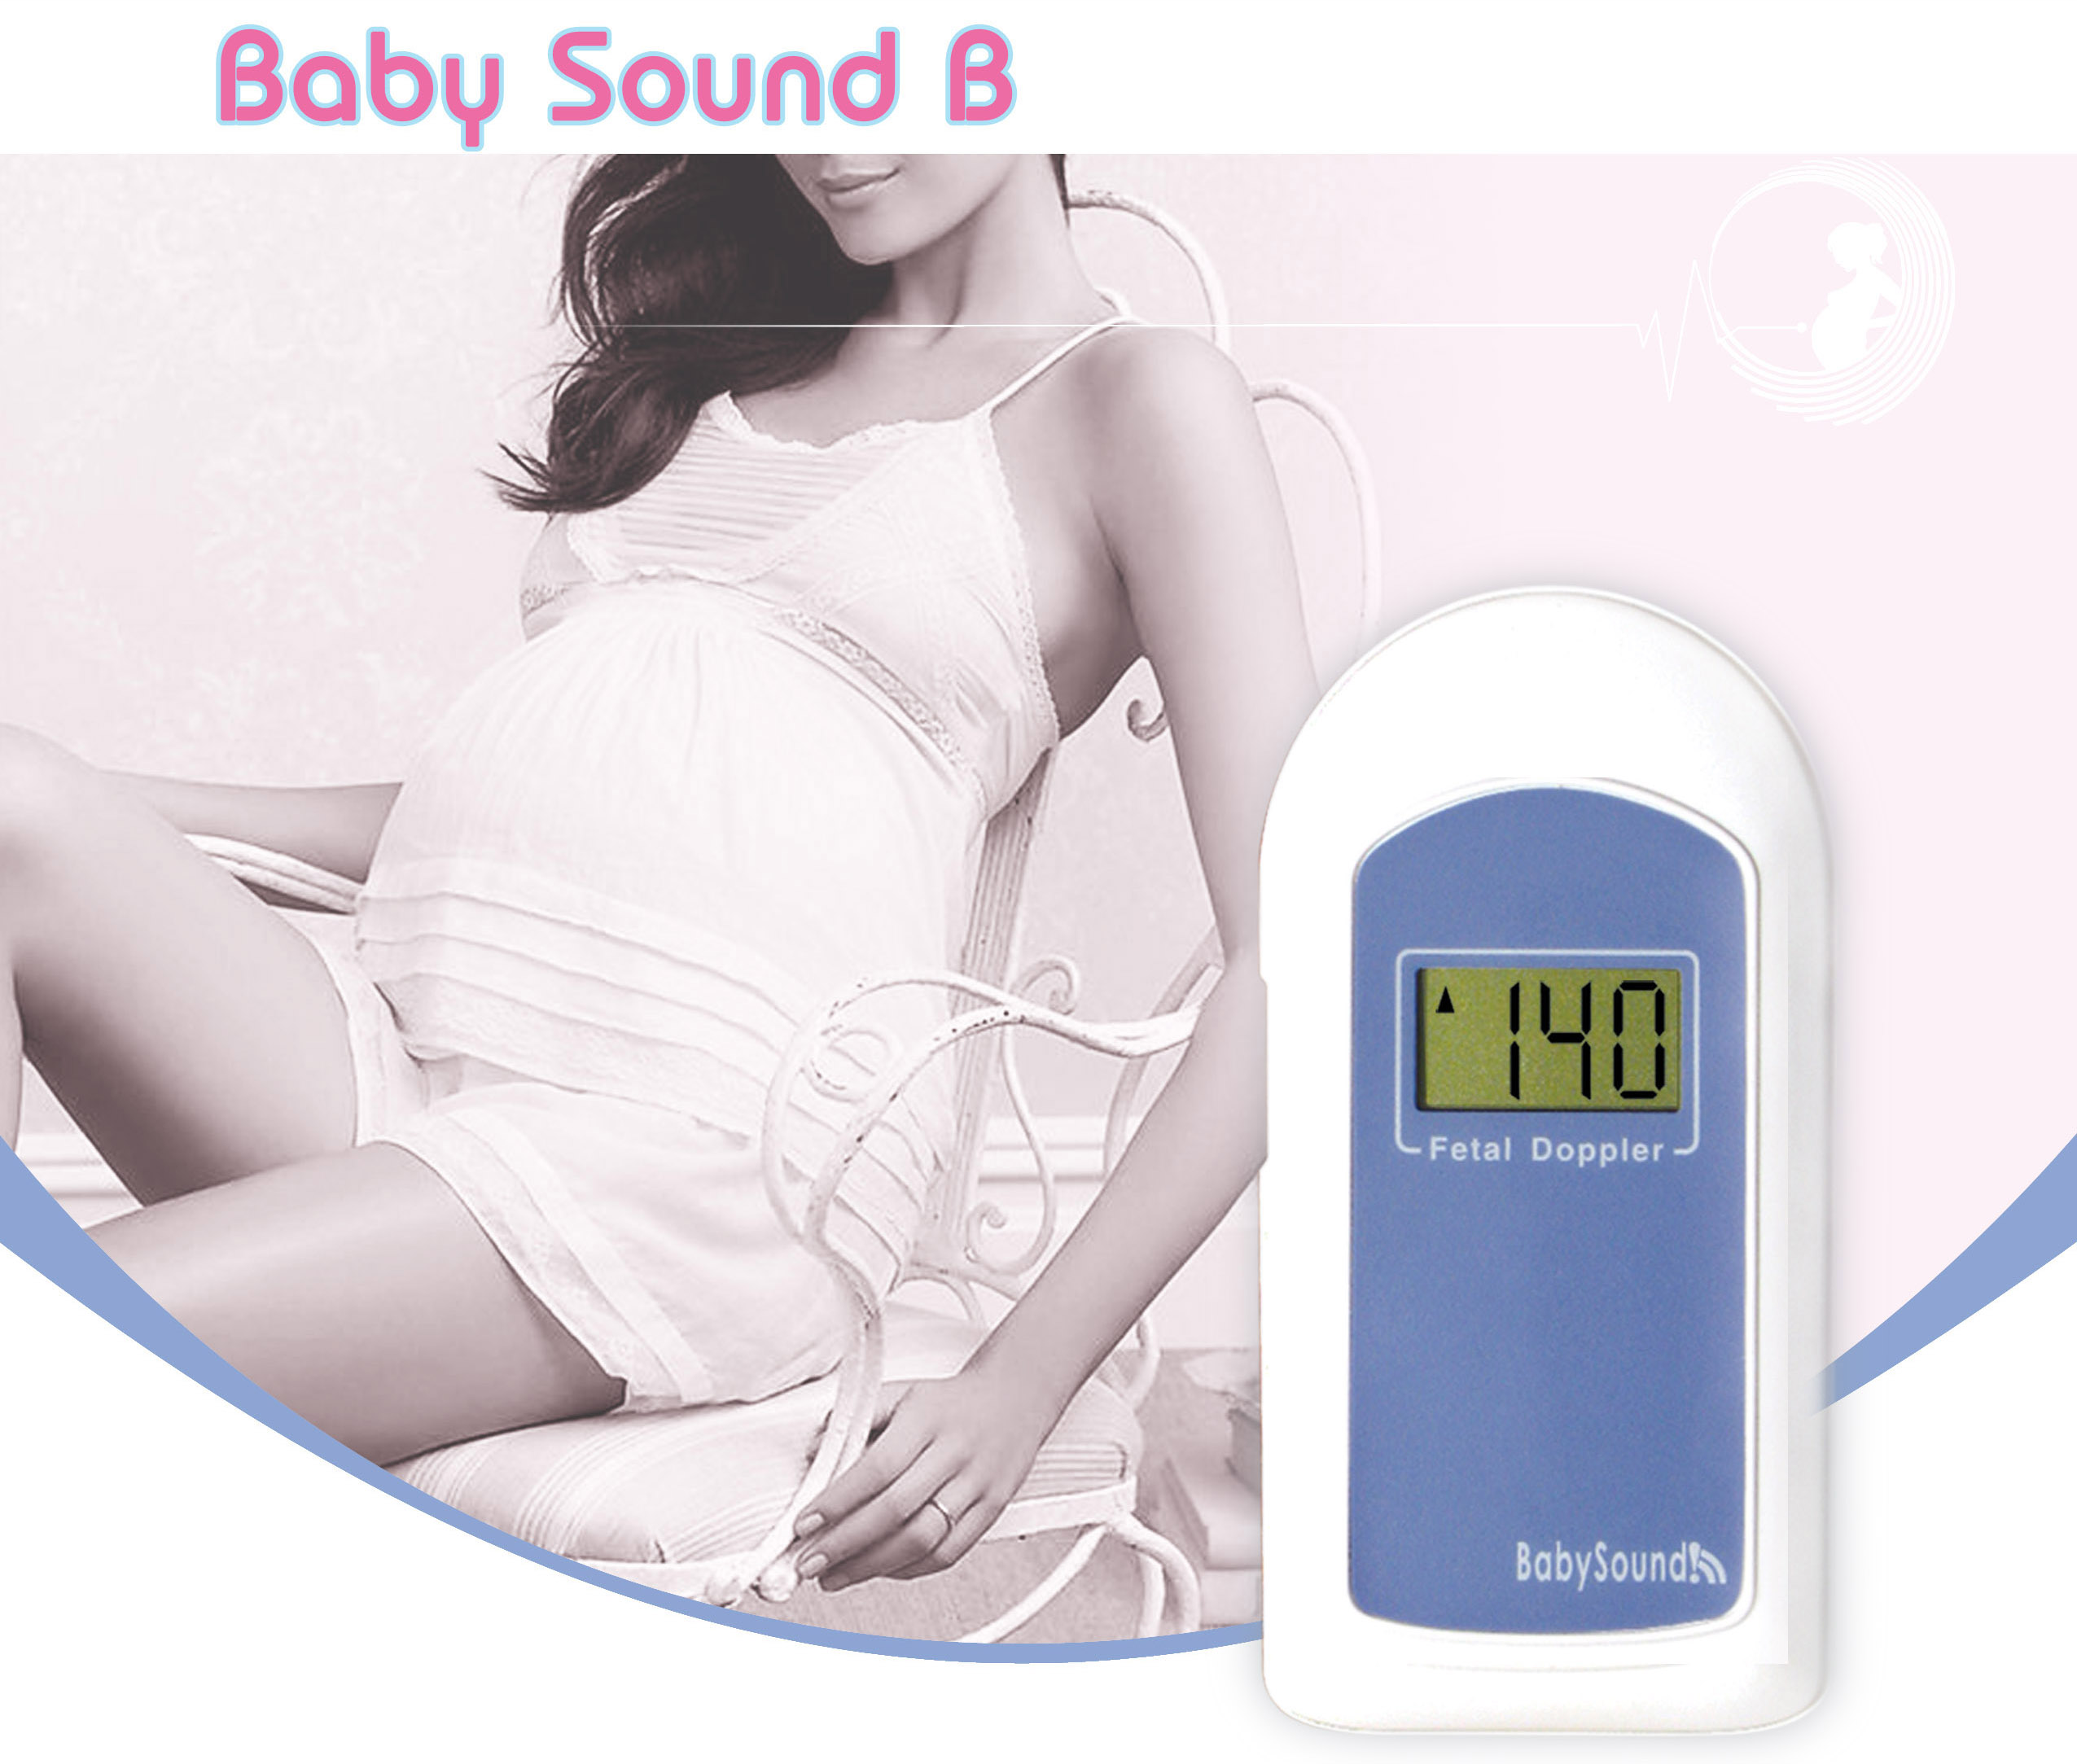 Cheap Baby Sound B Fetal Doppler with LCD Display MSLBSB